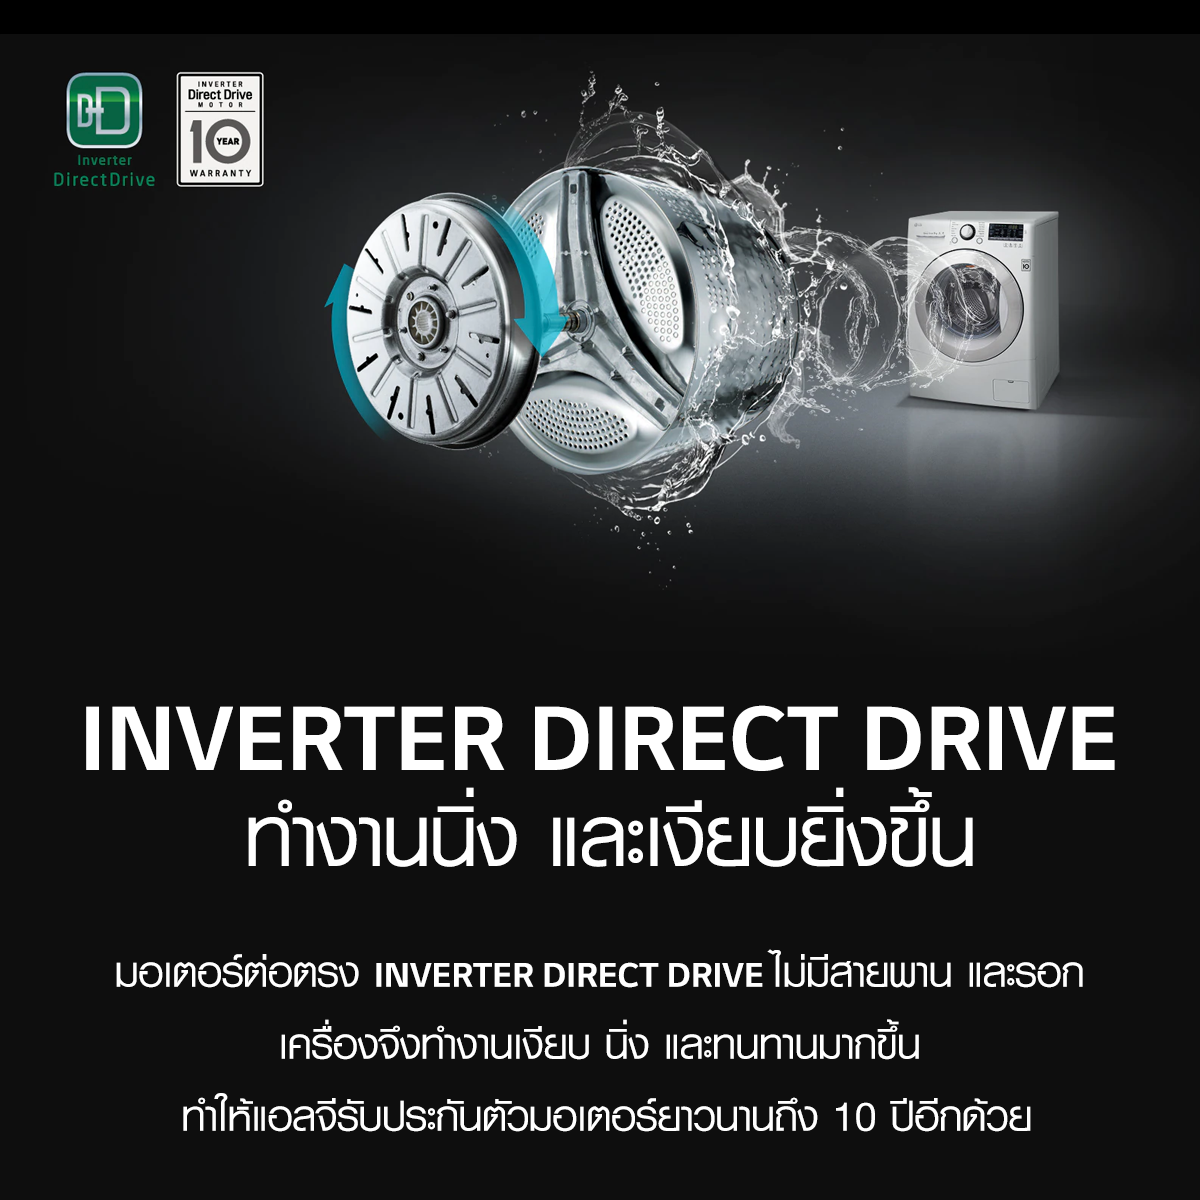 LG เครื่องซักผ้าฝาหน้า รุ่น FM1207N6W ระบบ Inverter Direct Drive ความจุซัก 7 กก.